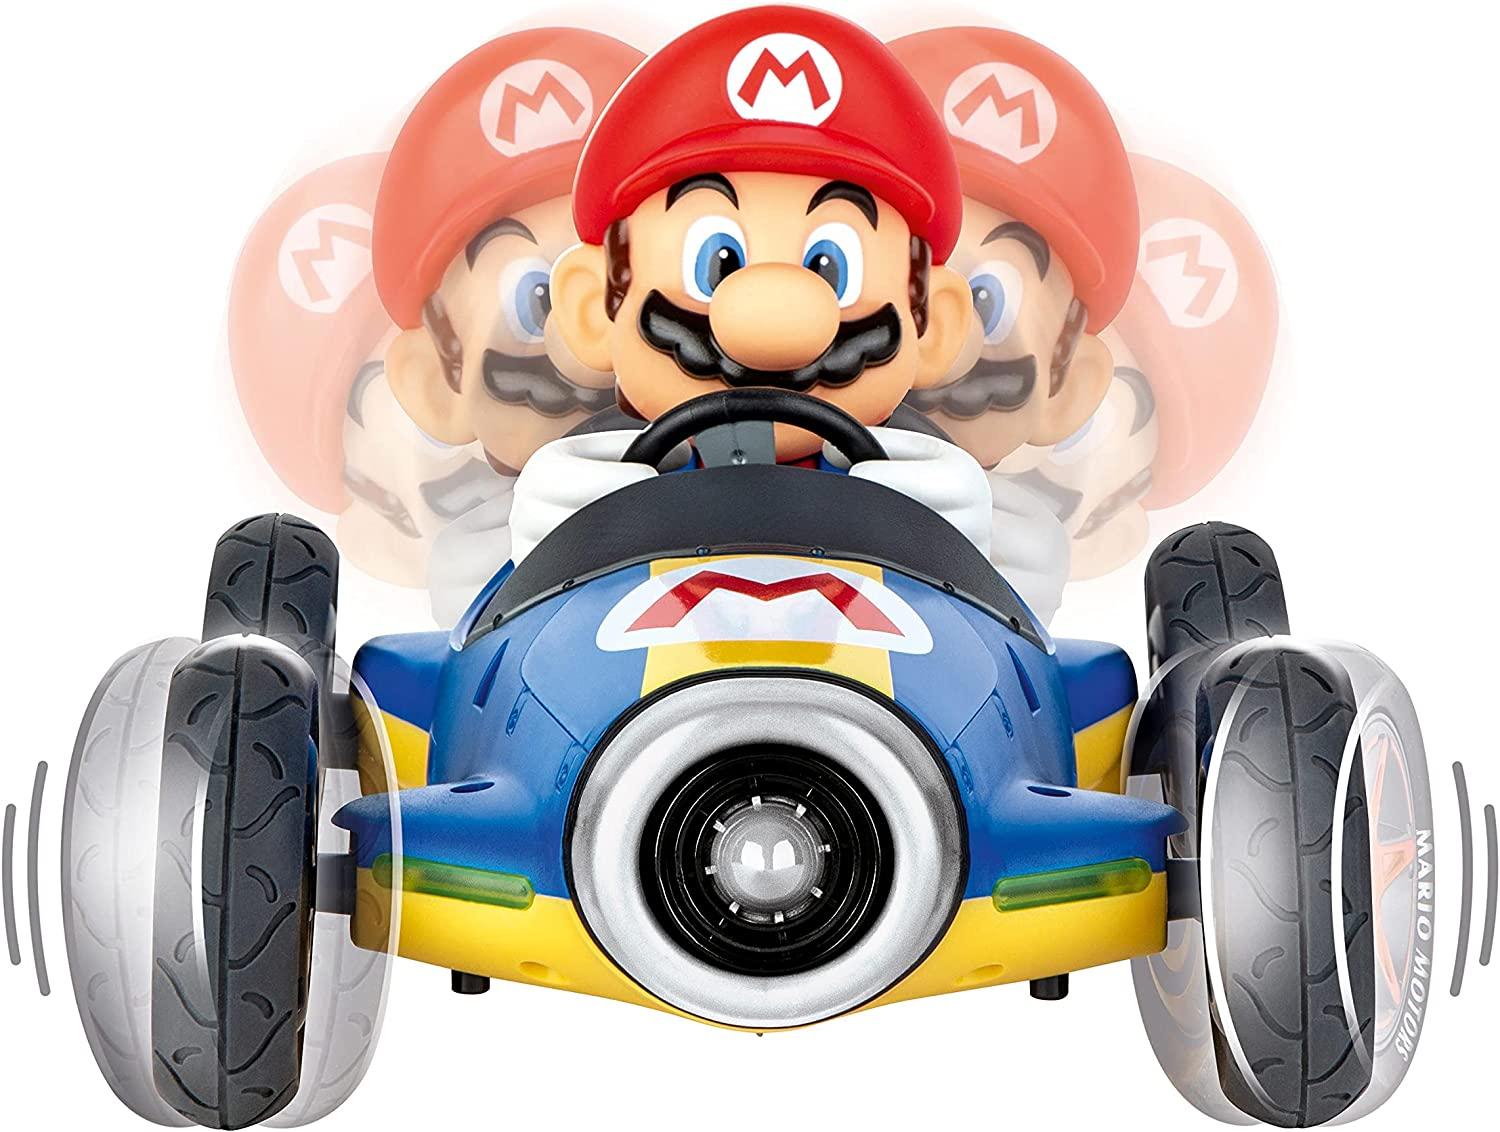 Voiture radiocommandée : Mario Kart - Jeux et jouets Carrera